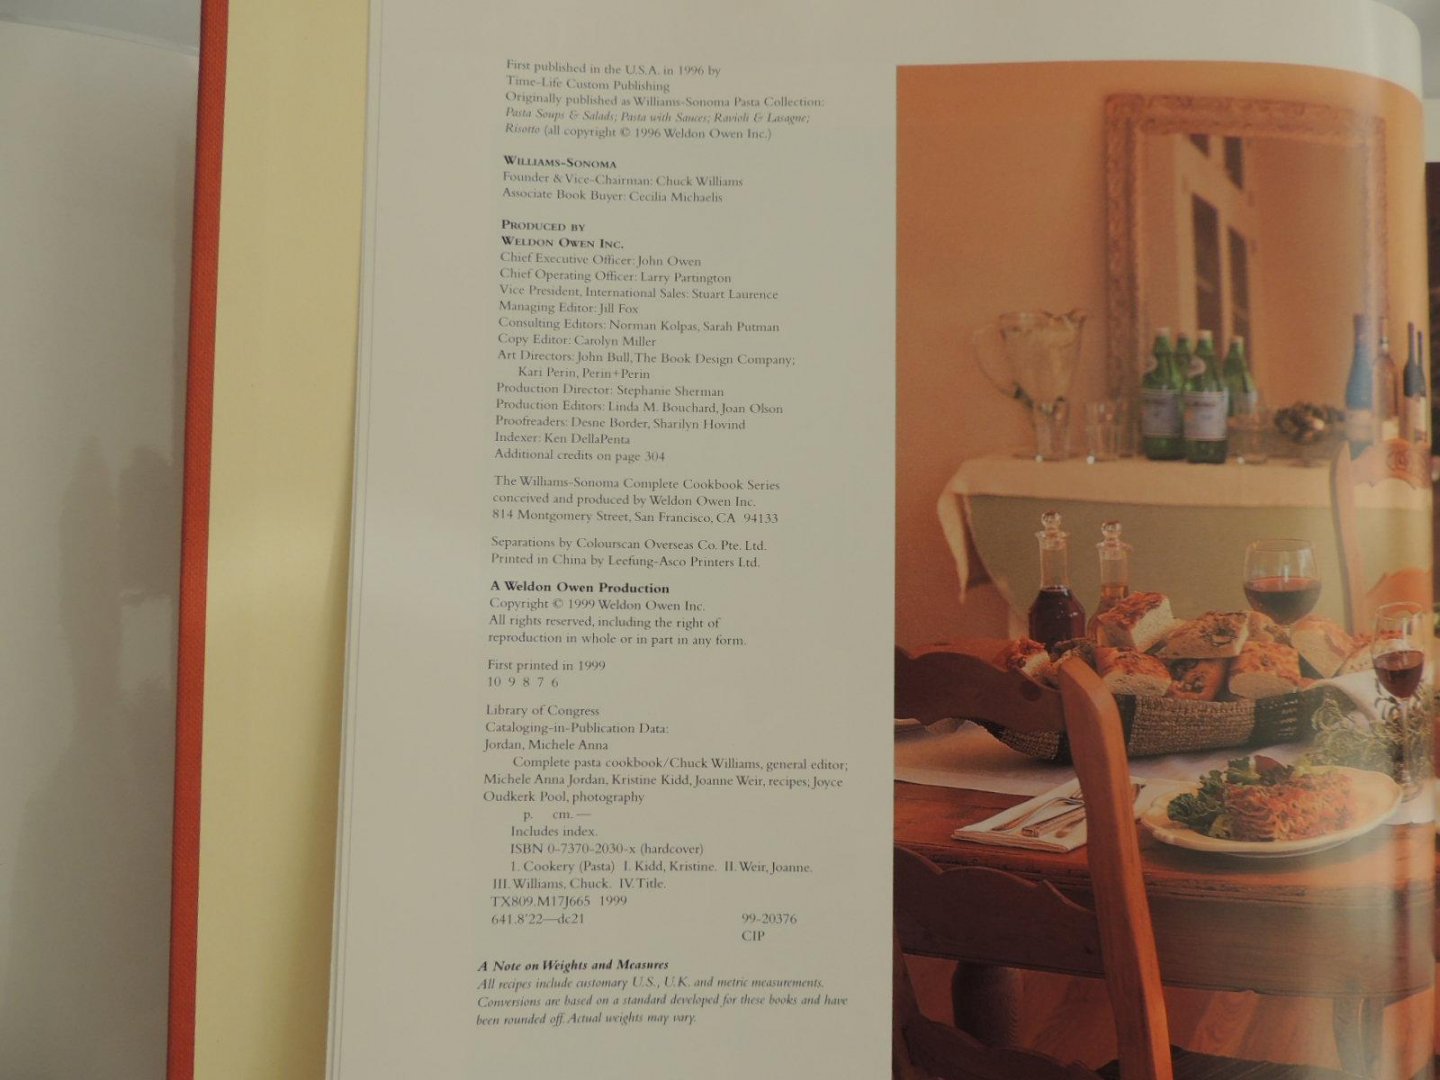 by Michele Anna Jordan  (Author), Kristine Kidd (Author), Joanne Weir  (Author), Chuck Williams (Author), Joyce Oudkerk Pool (Photographer) - Williams-Sonoma Complete Pasta Cookbook - an oversized, full-color illustrated cookbook.